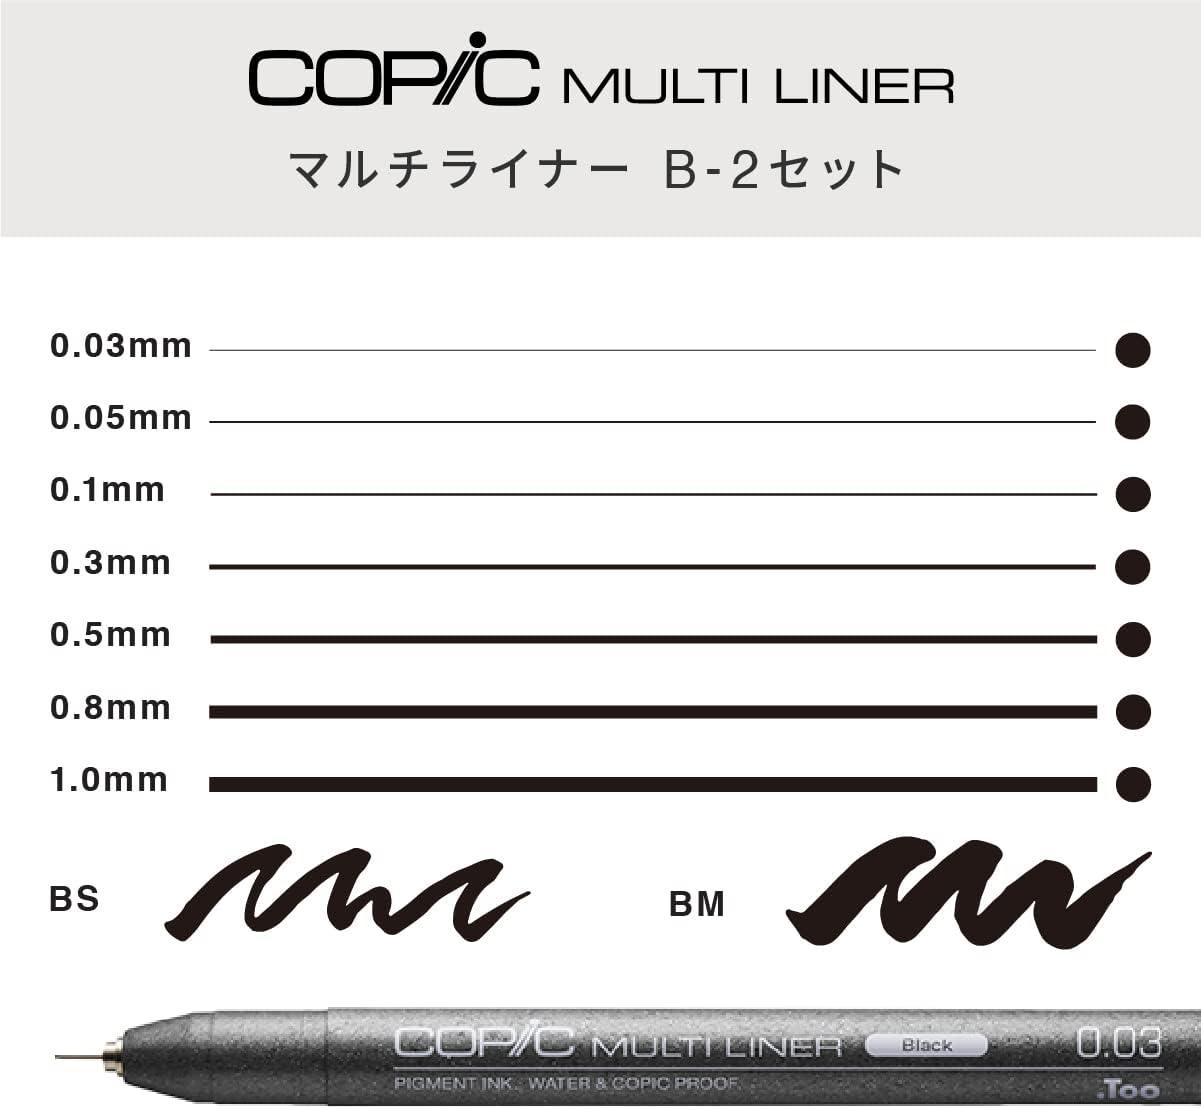 Copic : Multiliner SP : Pen : 0.25mm : Black